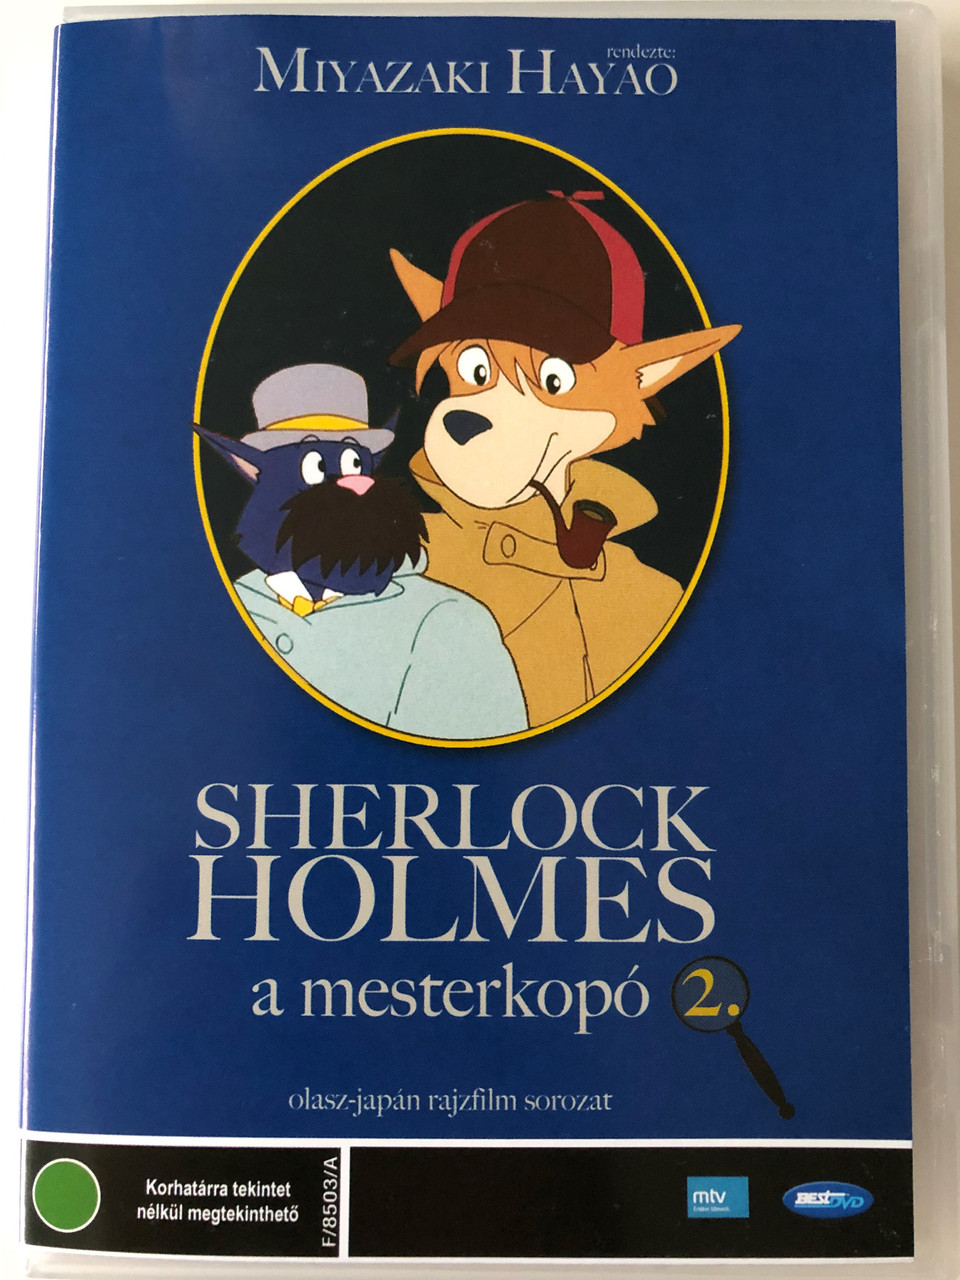 Fiuto di Sherlock Holmes 2. DVD 1984 Sherlock Holmes a mesterkopó 2.  (Sherlock Hound ) / Directed by Miyazaki Hayao / Japanese-Italian cartoon  series / Episodes 4-6 - bibleinmylanguage